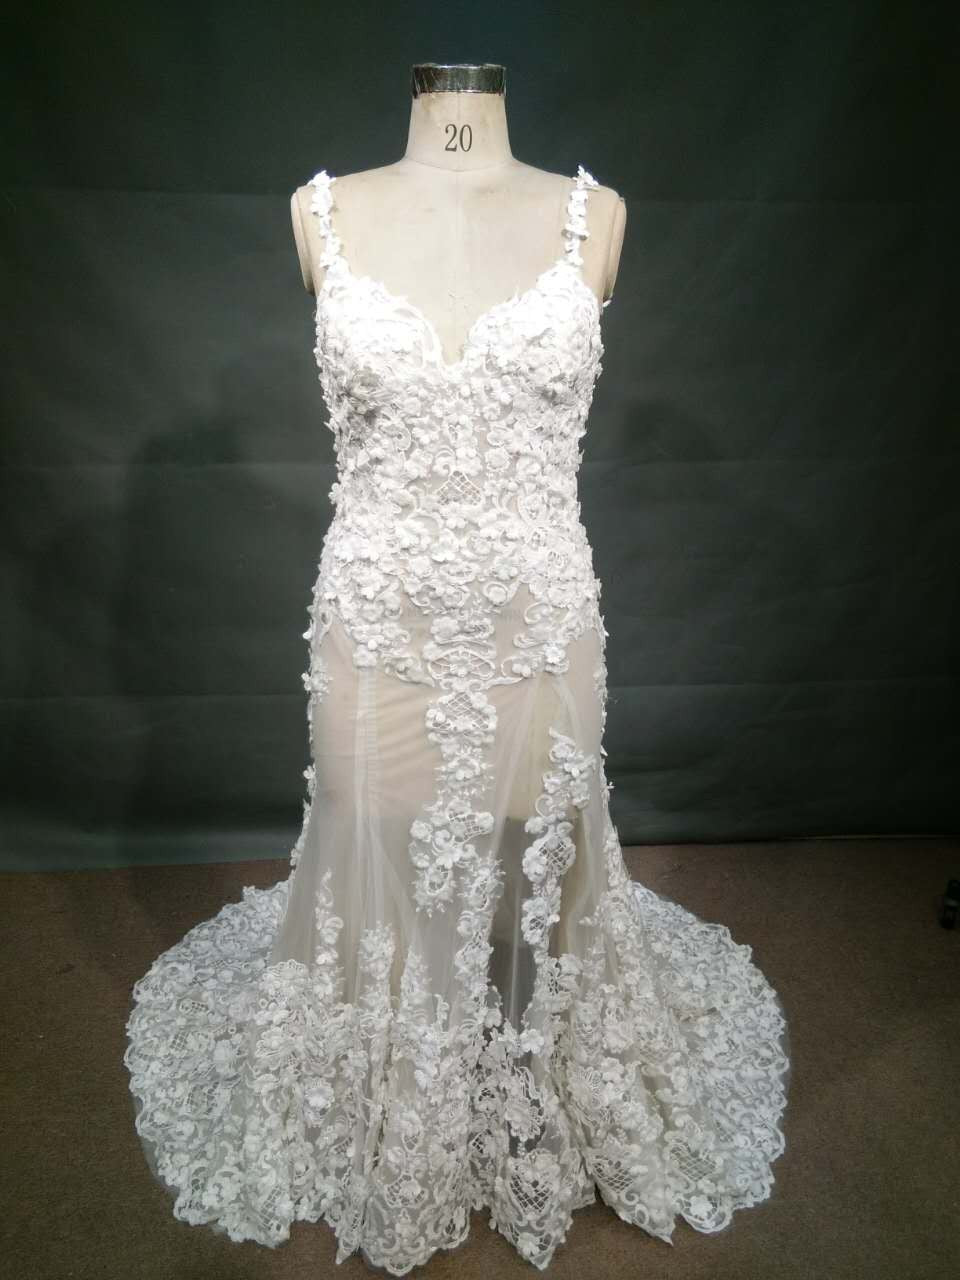 Sleeveless plus size wedding gown inspired by Galia Lahav Kira dsign